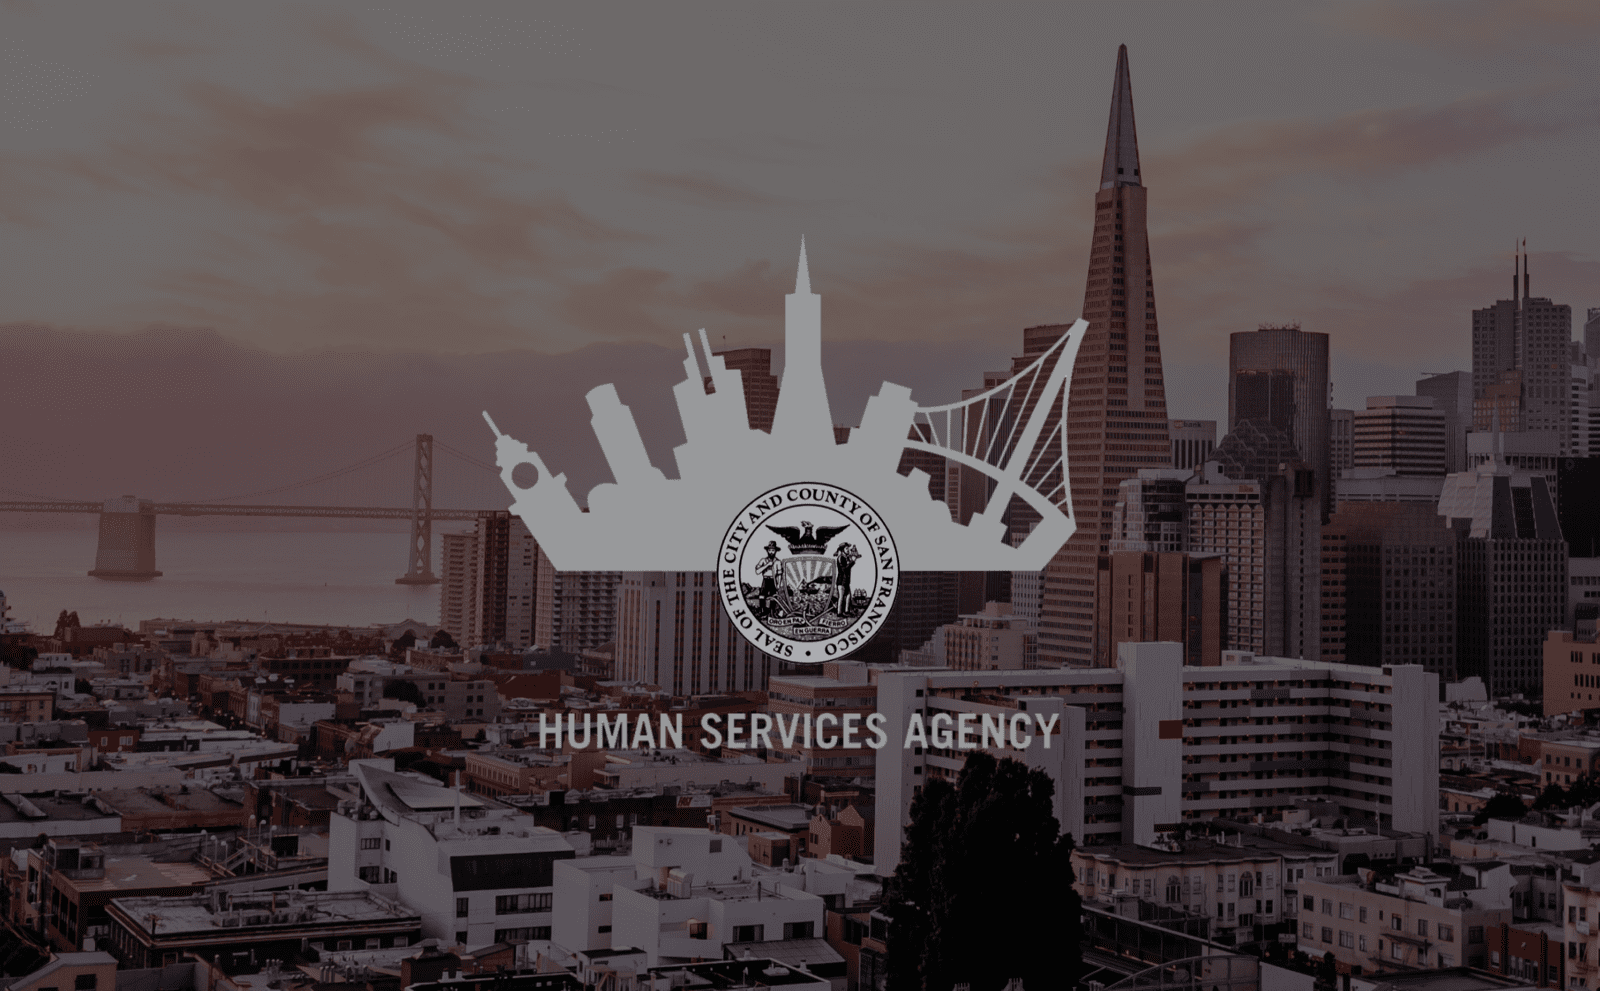 Launchpad - San Francisco Human Service Agency